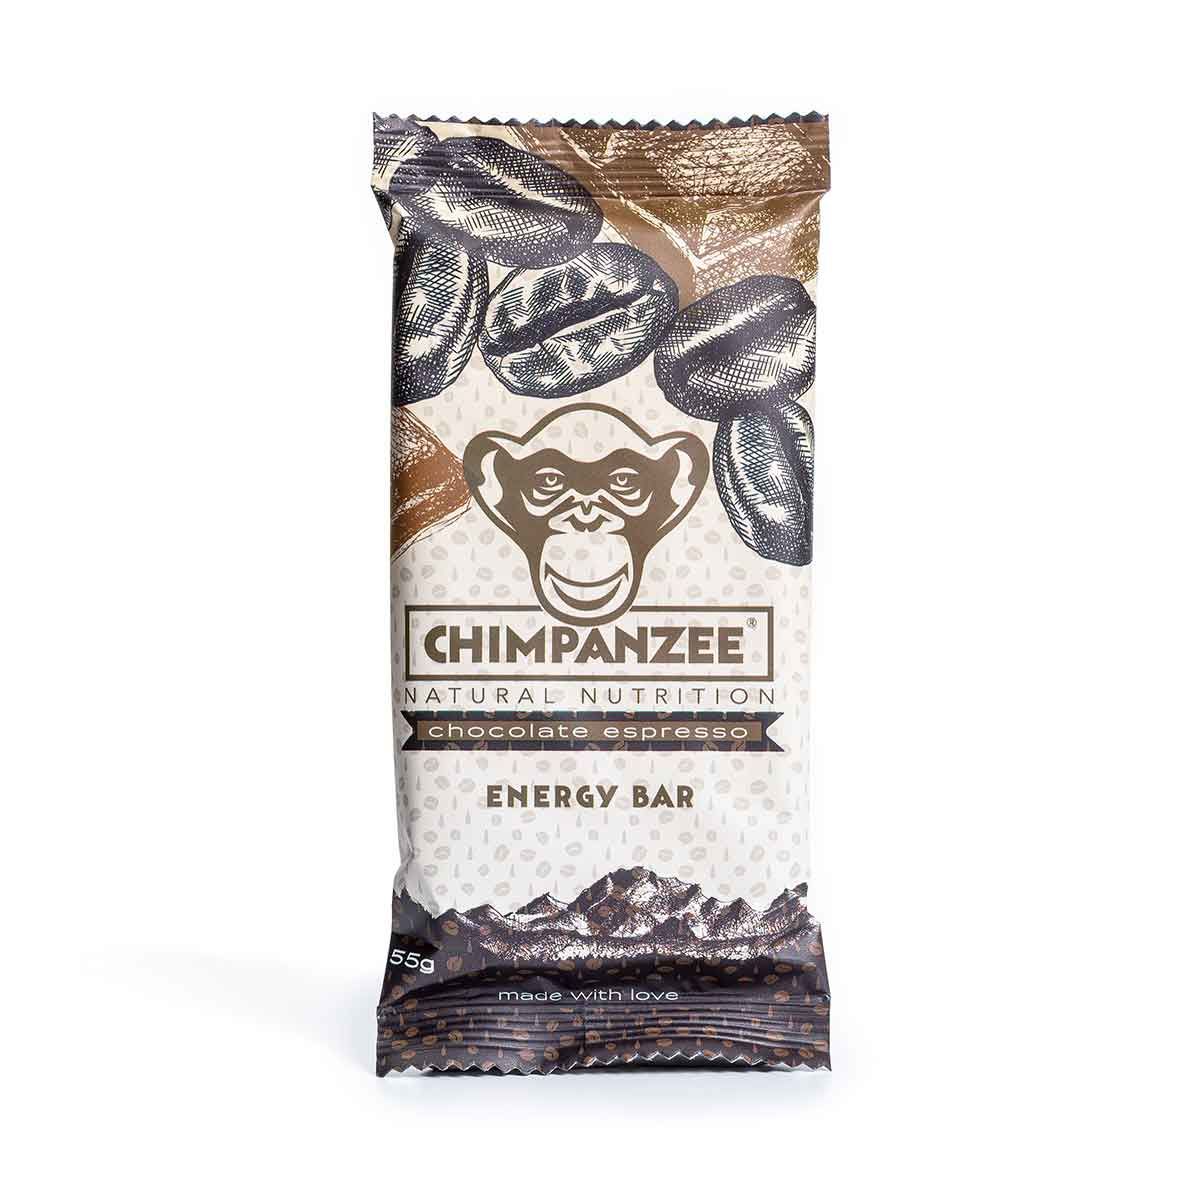 Chimpanzee energy bar - Chocolate espresso